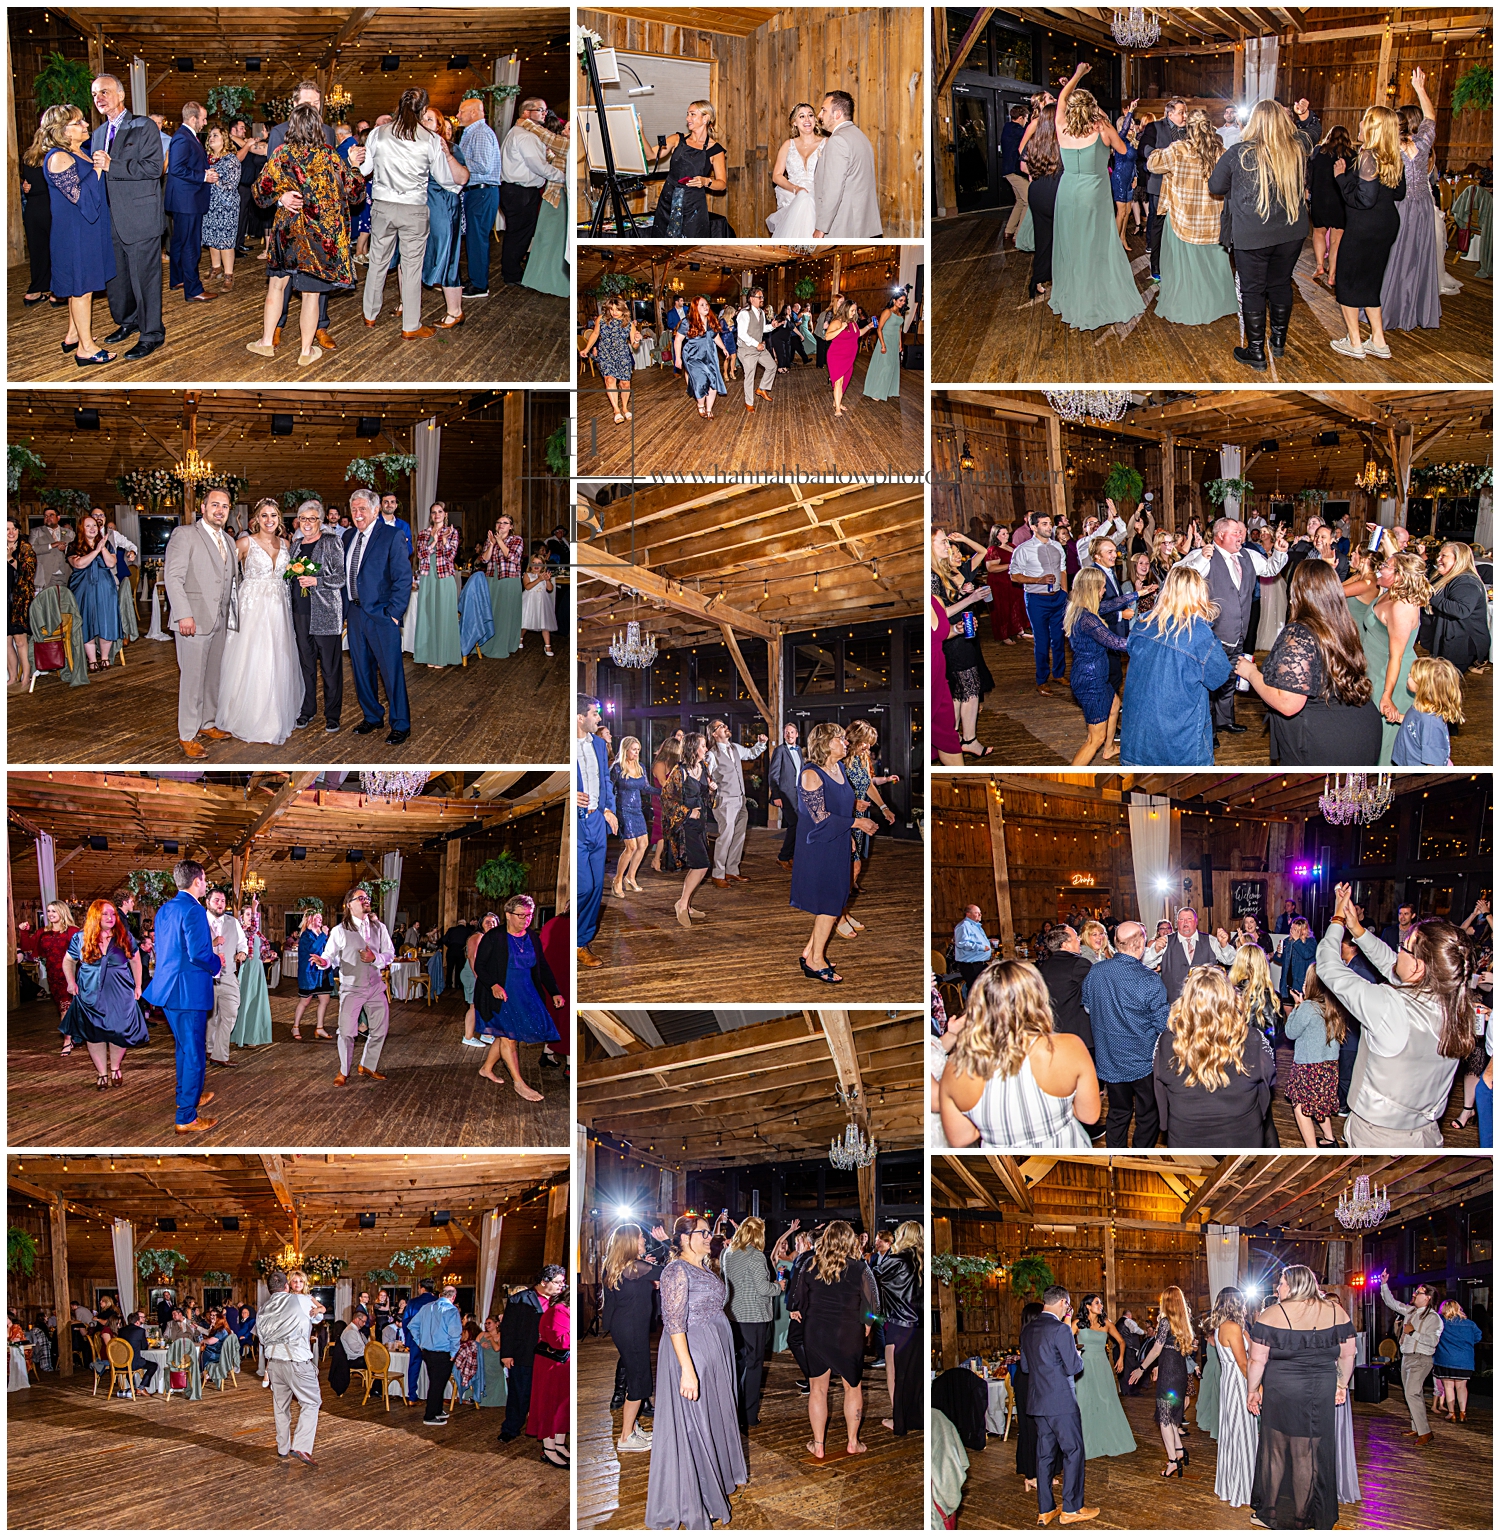 Open floor party dancing at wedding reception.